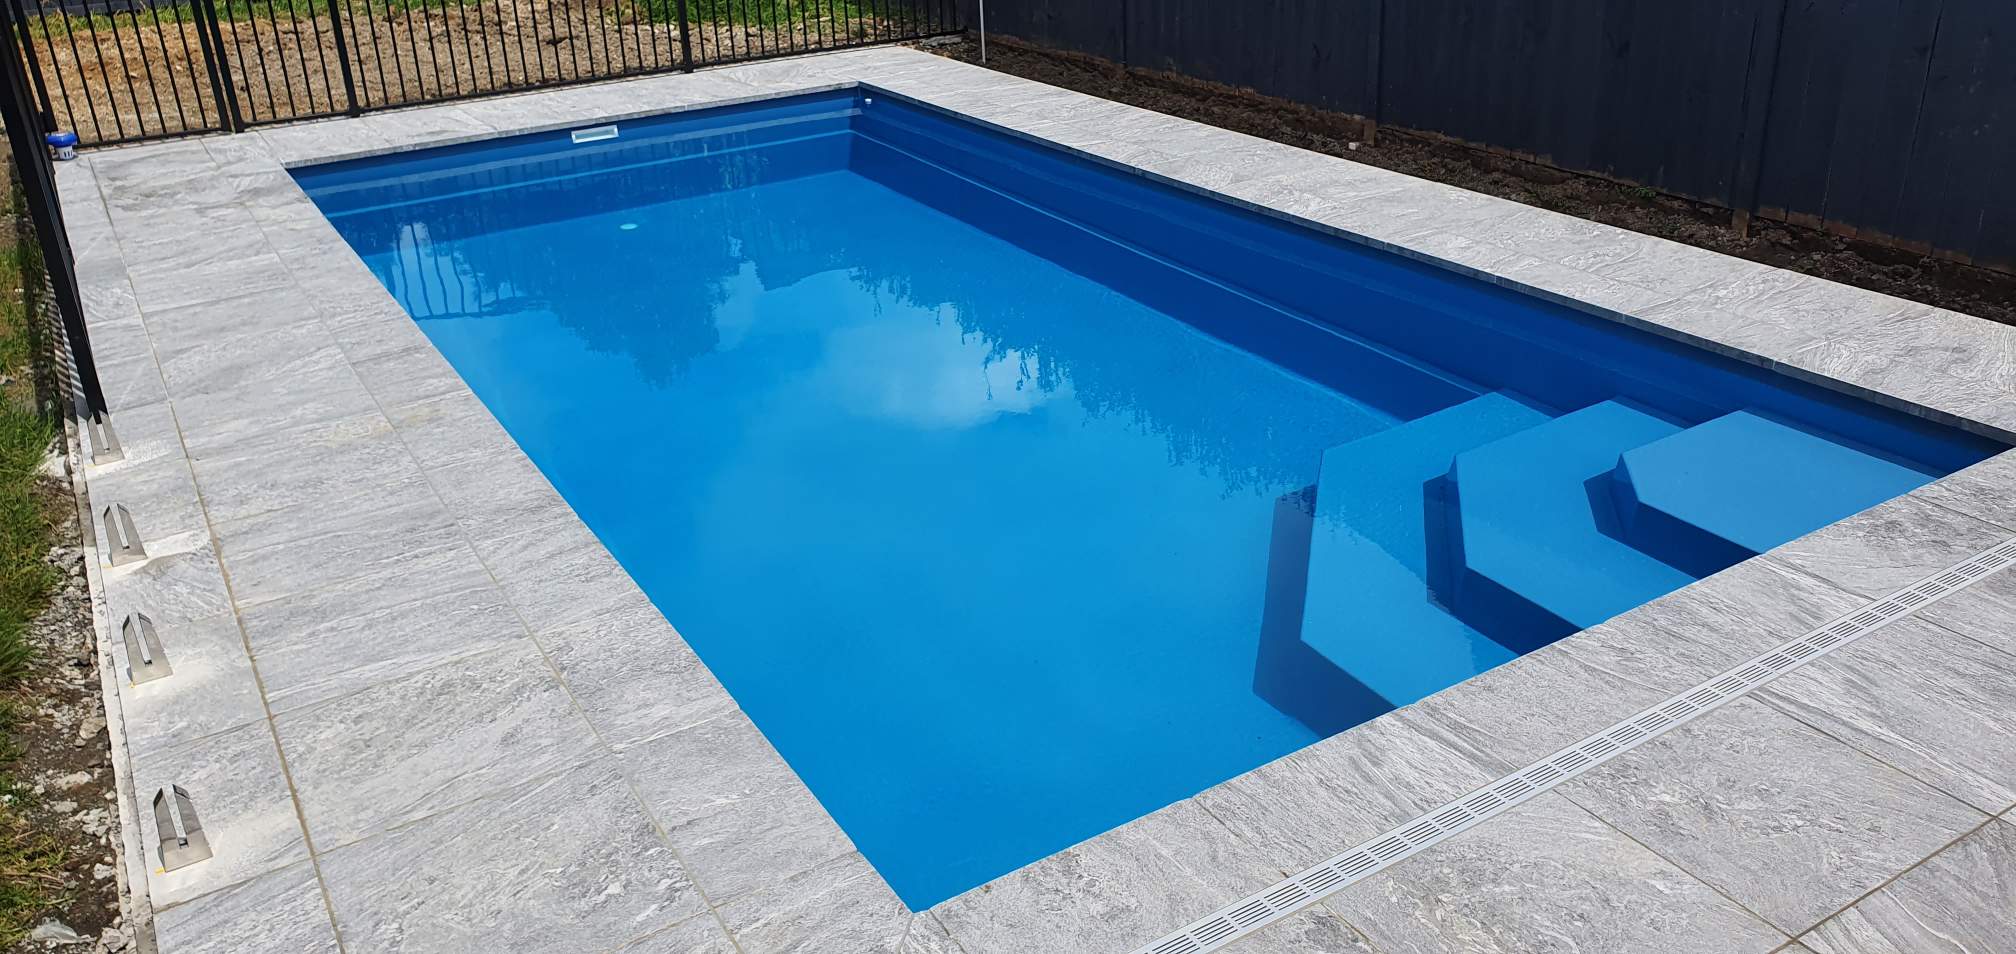 8 meter inground fibreglass swimming pool in auckland